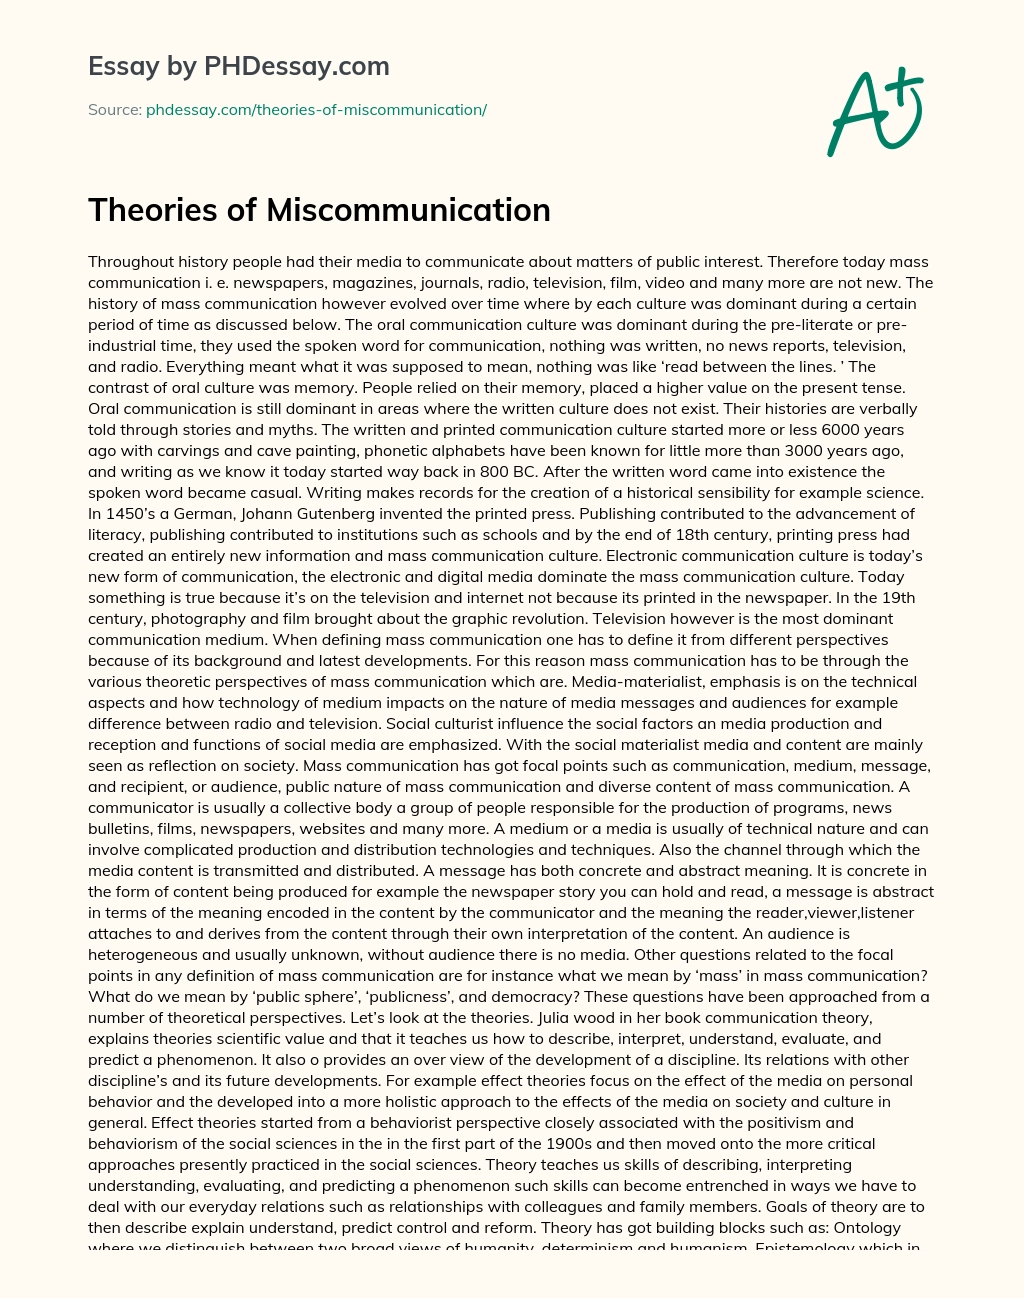 Theories of Miscommunication essay